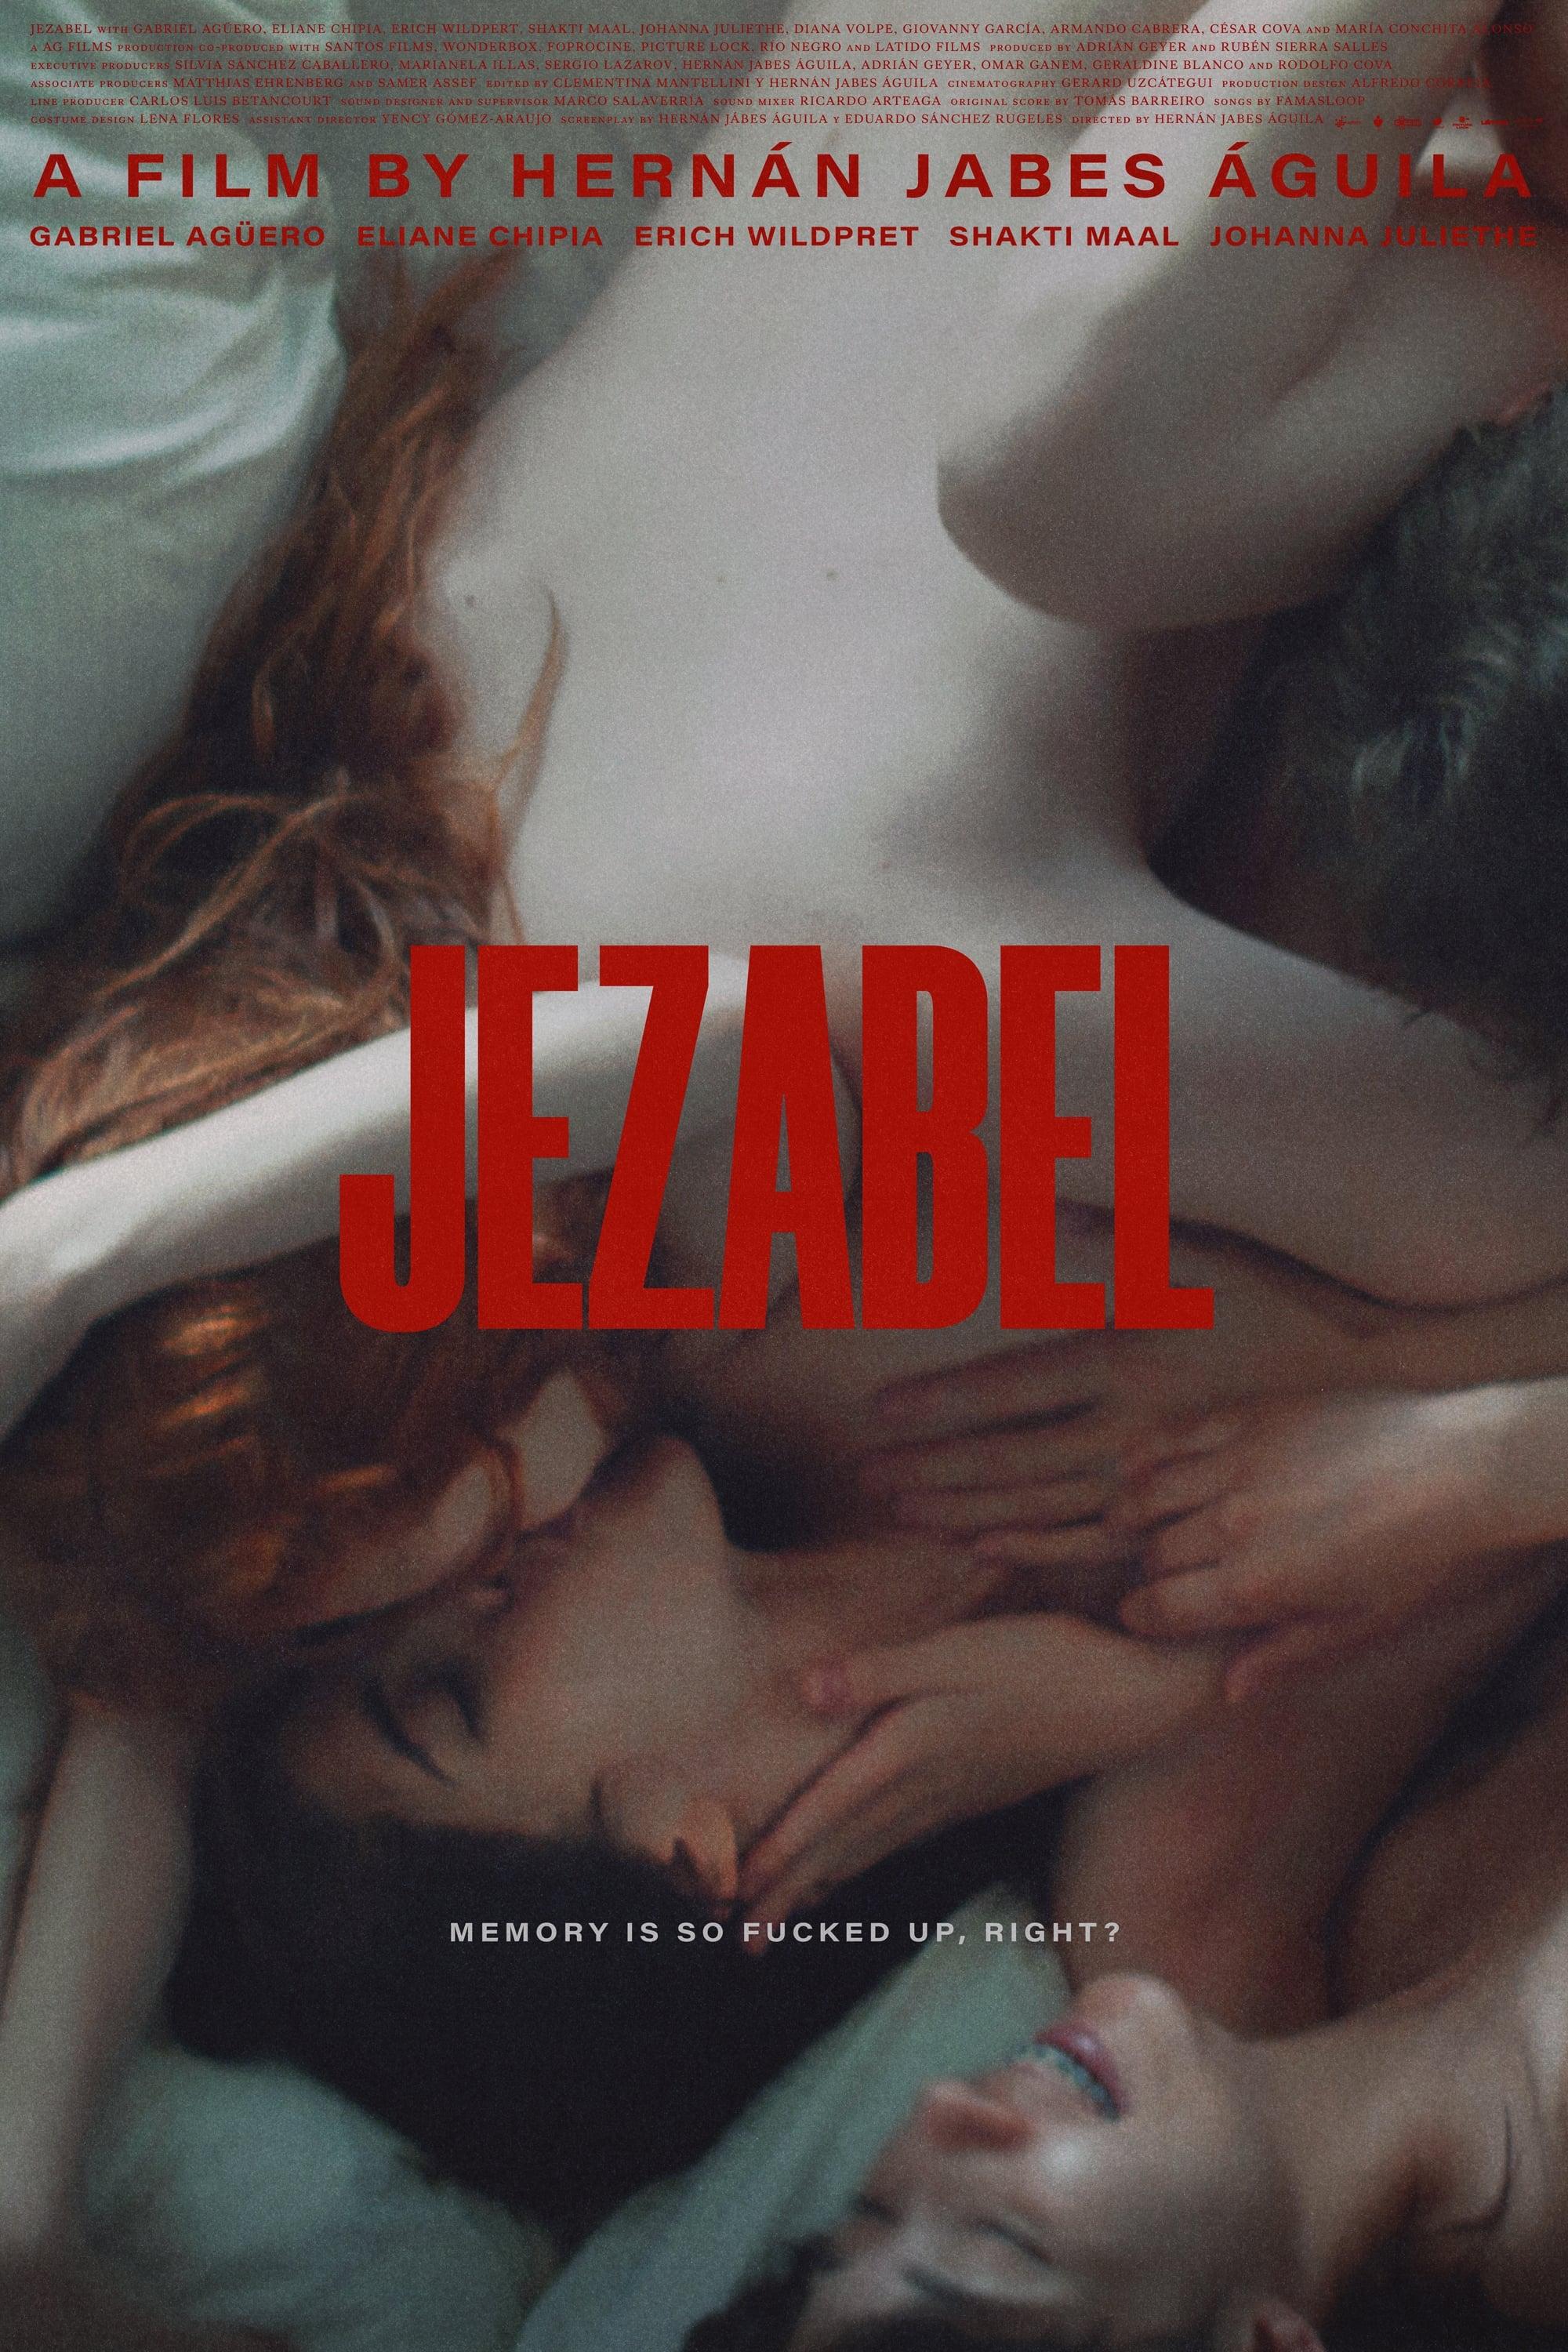 Jezabel poster